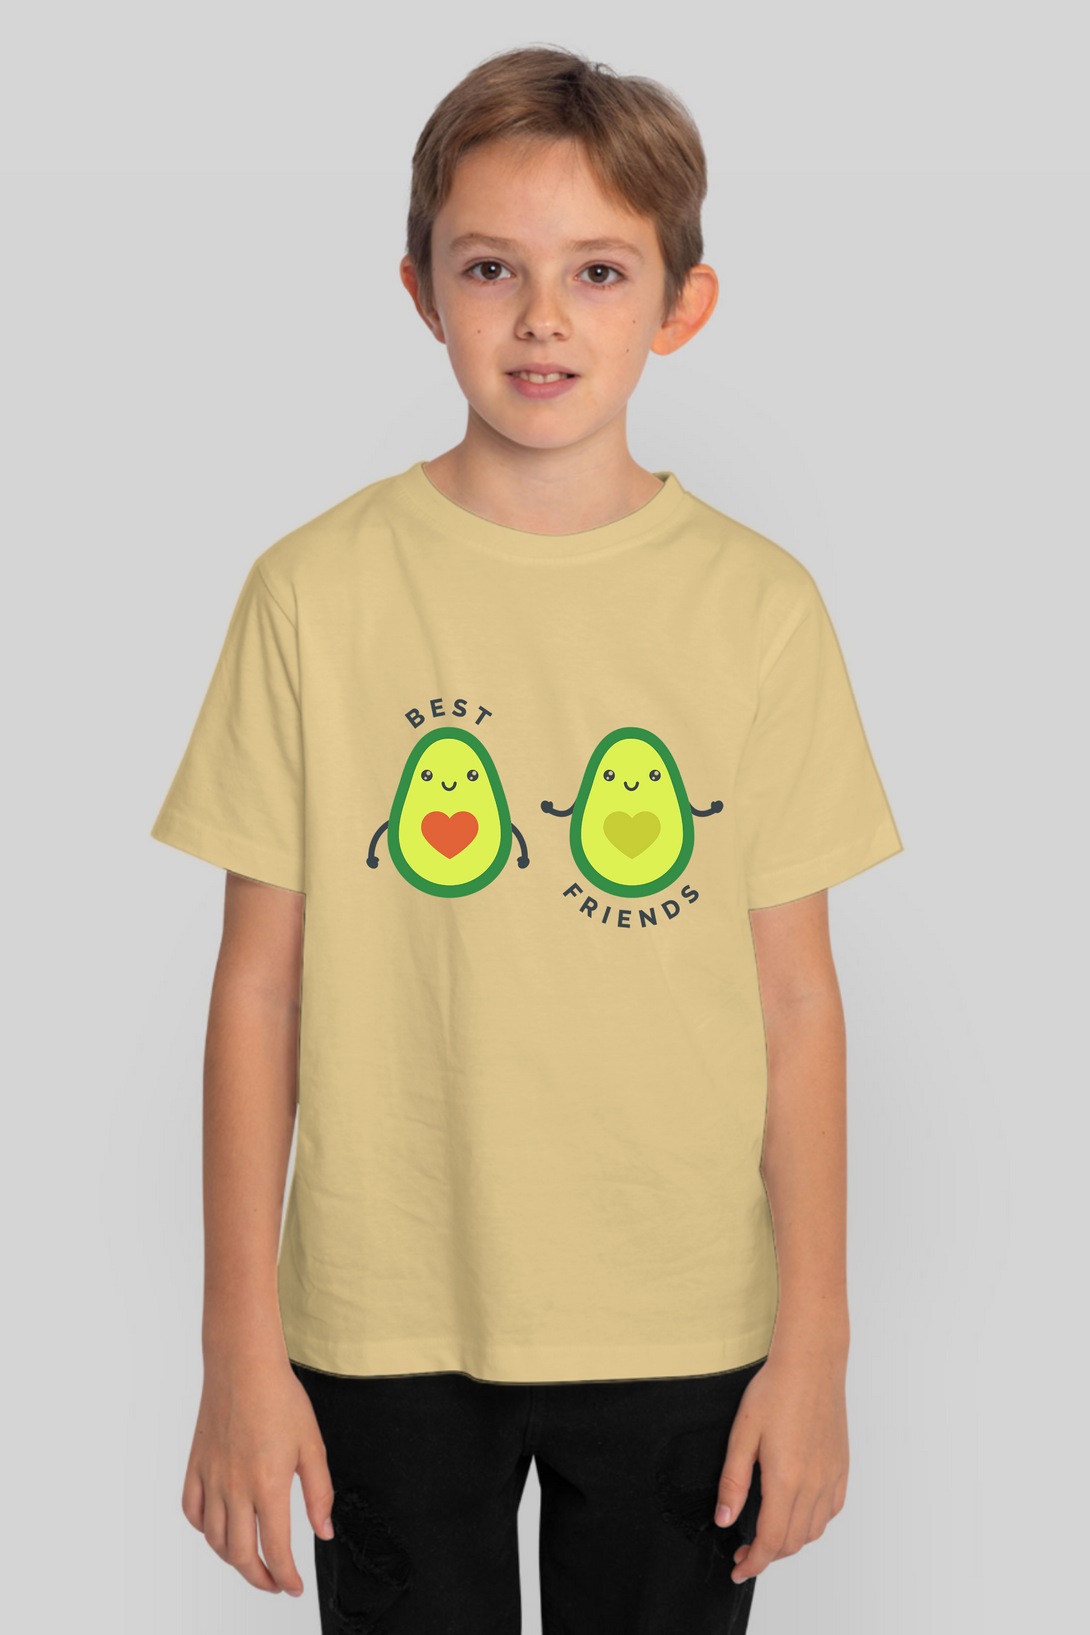 Avocado Friends Printed T-Shirt For Boy - WowWaves - 7